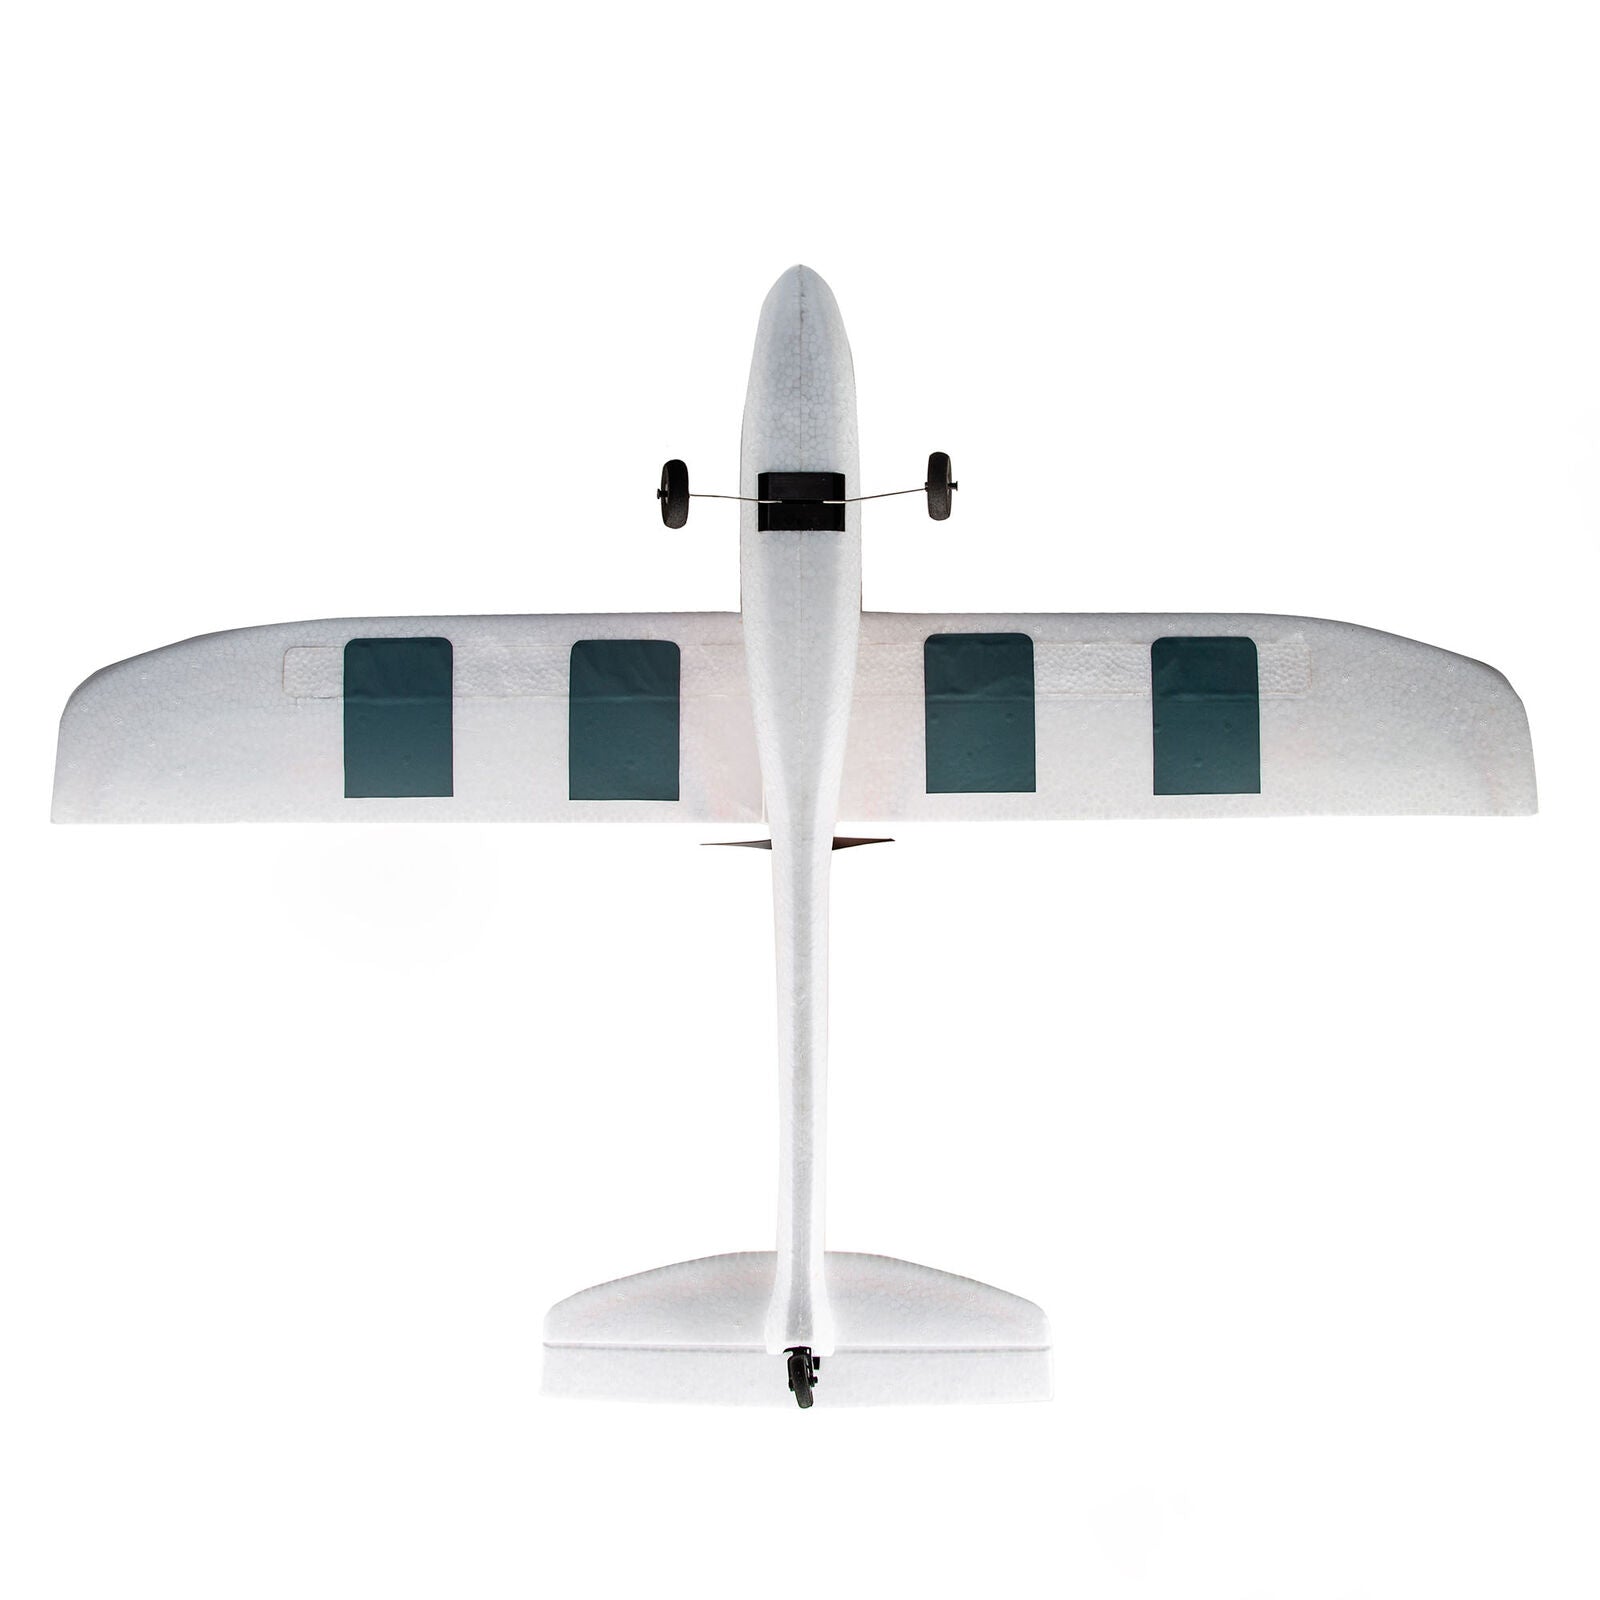 HobbyZone® Mini AeroScout RTF - PilotMall.com